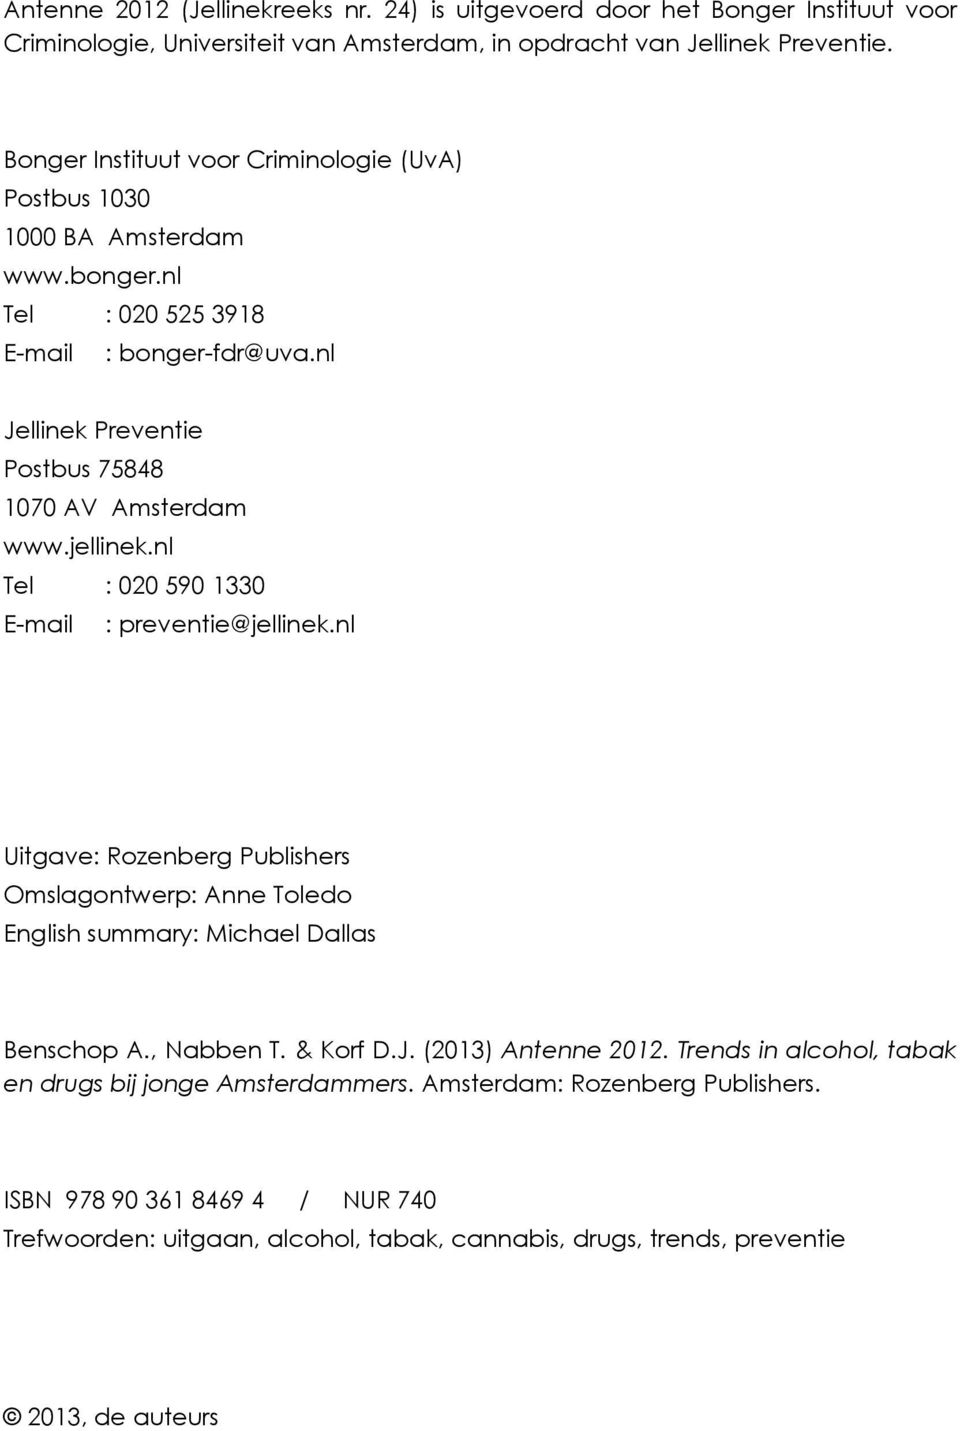 jellinek.nl Tel : 020 590 1330 E-mail : preventie@jellinek.nl Uitgave: Rozenberg Publishers Omslagontwerp: Anne Toledo English summary: Michael Dallas Benschop A., Nabben T. & Korf D.J.